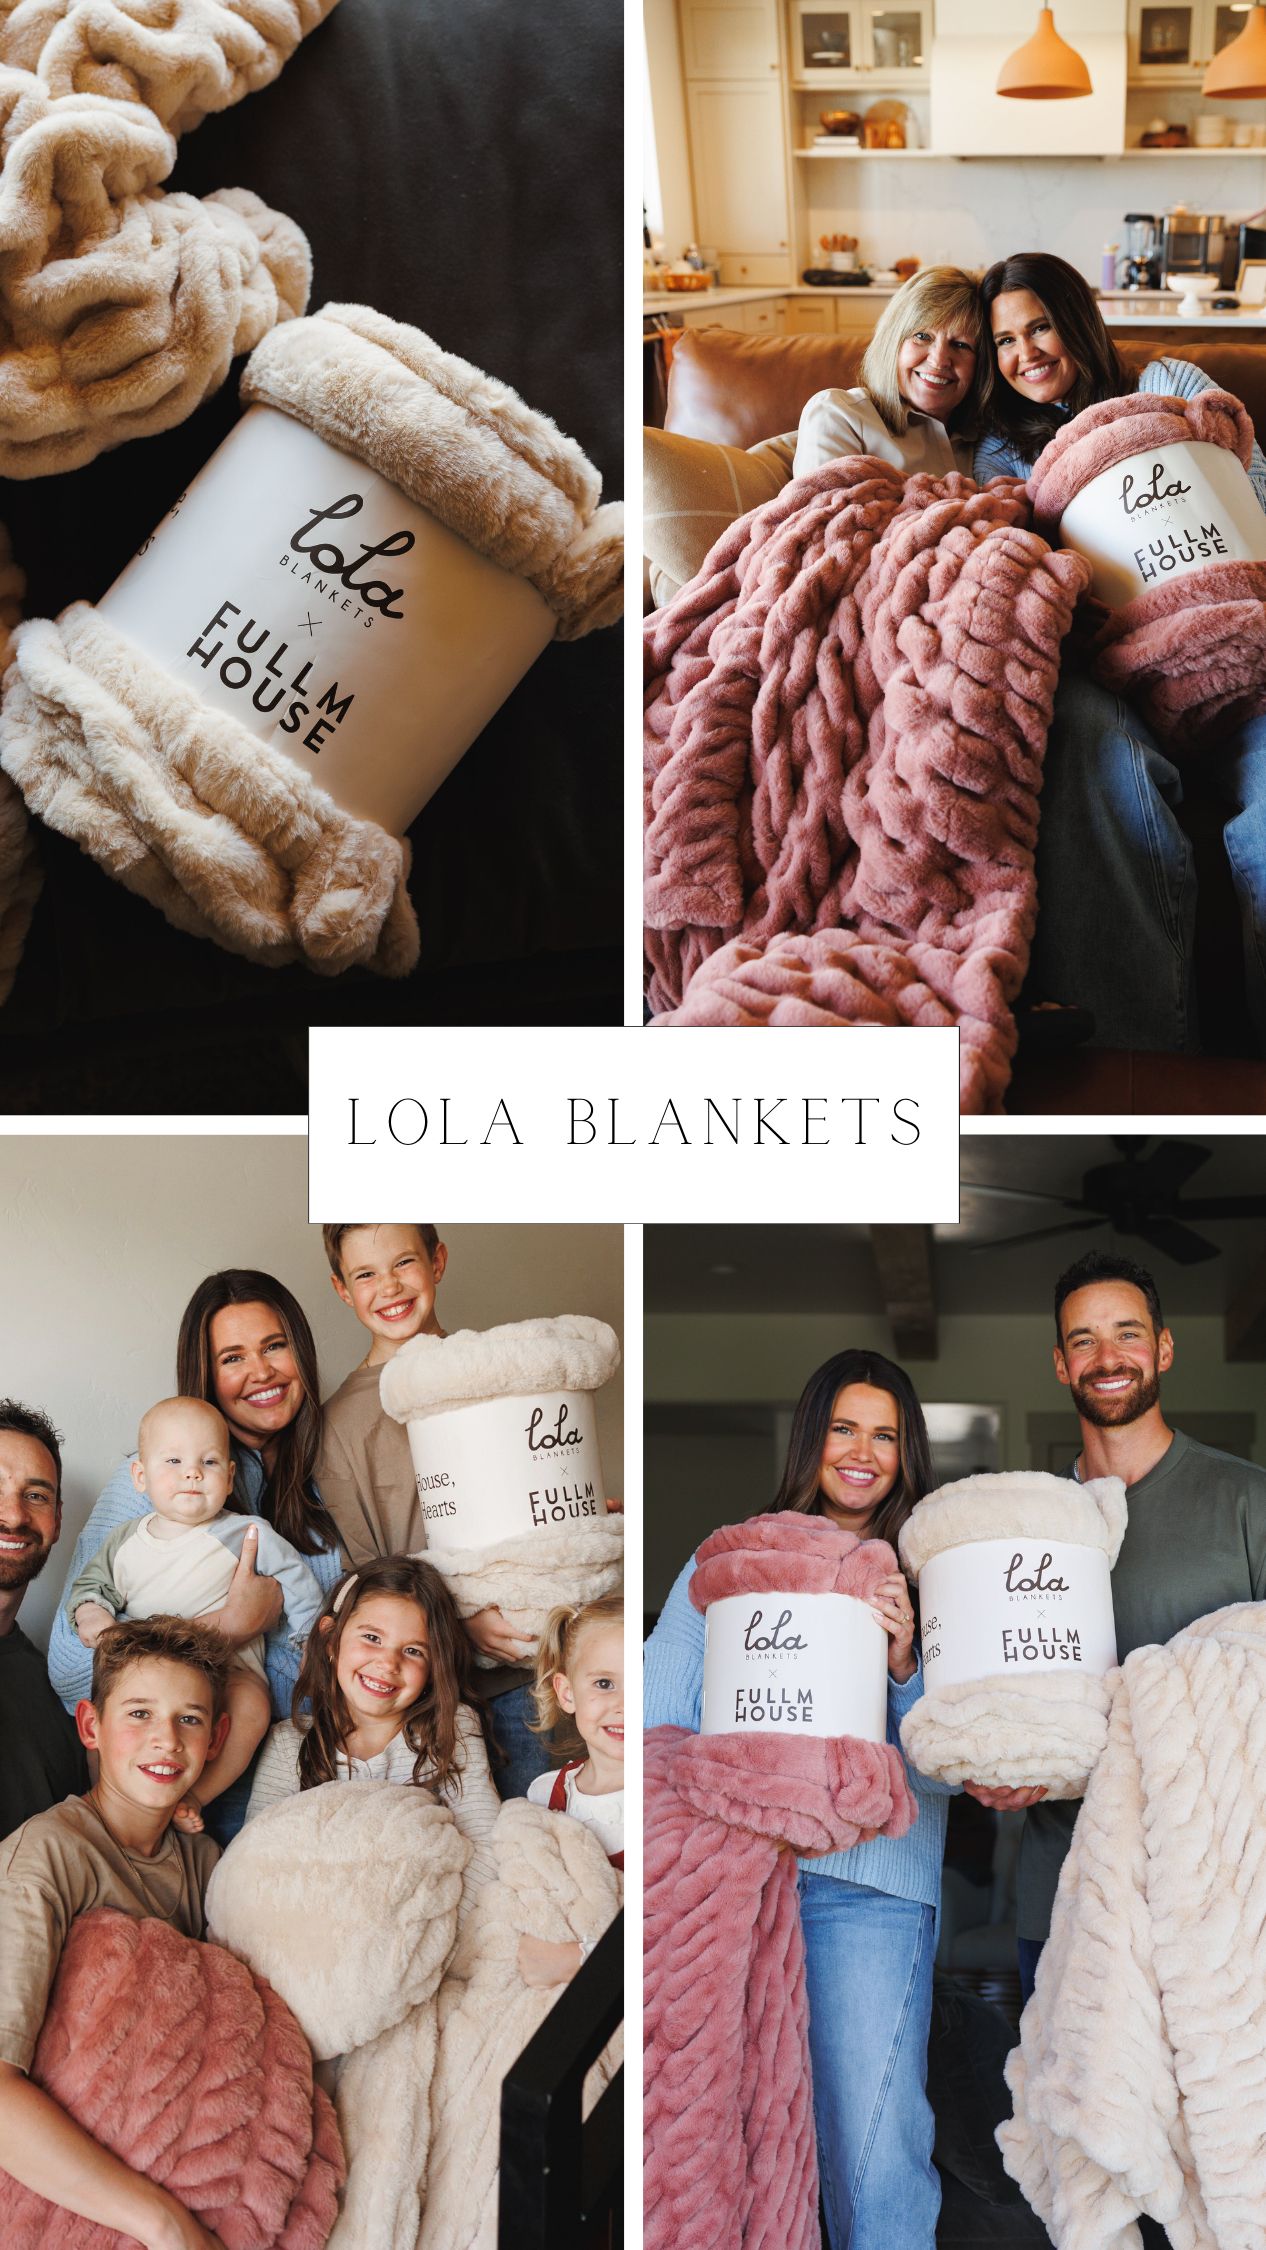 Image for Fullmhouse X Lola Blankets